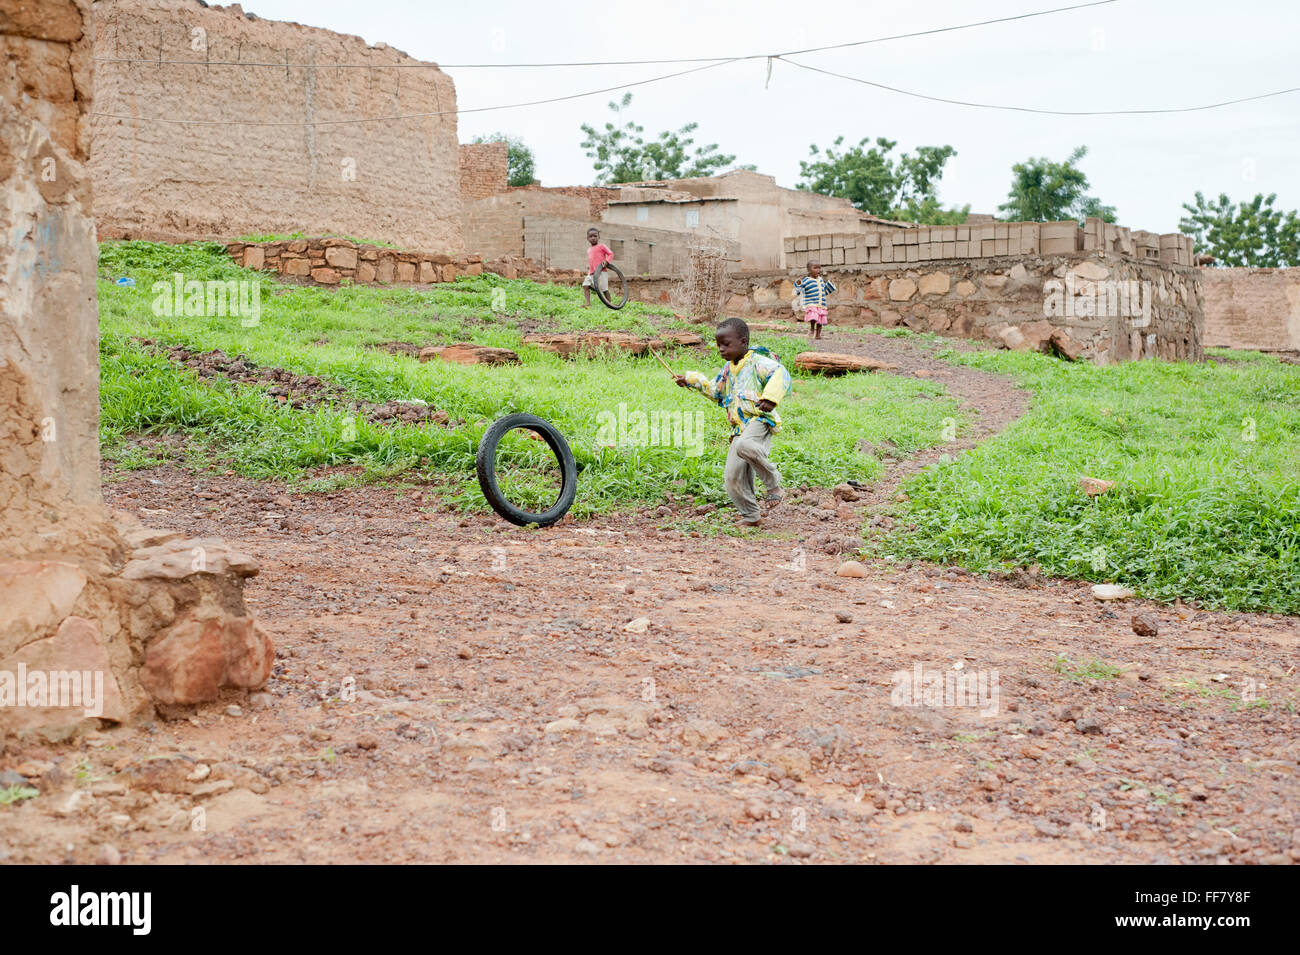 Mali, Afrika - schwarzes Kind Spaß mit seinem Rad in Afrika Stockfoto